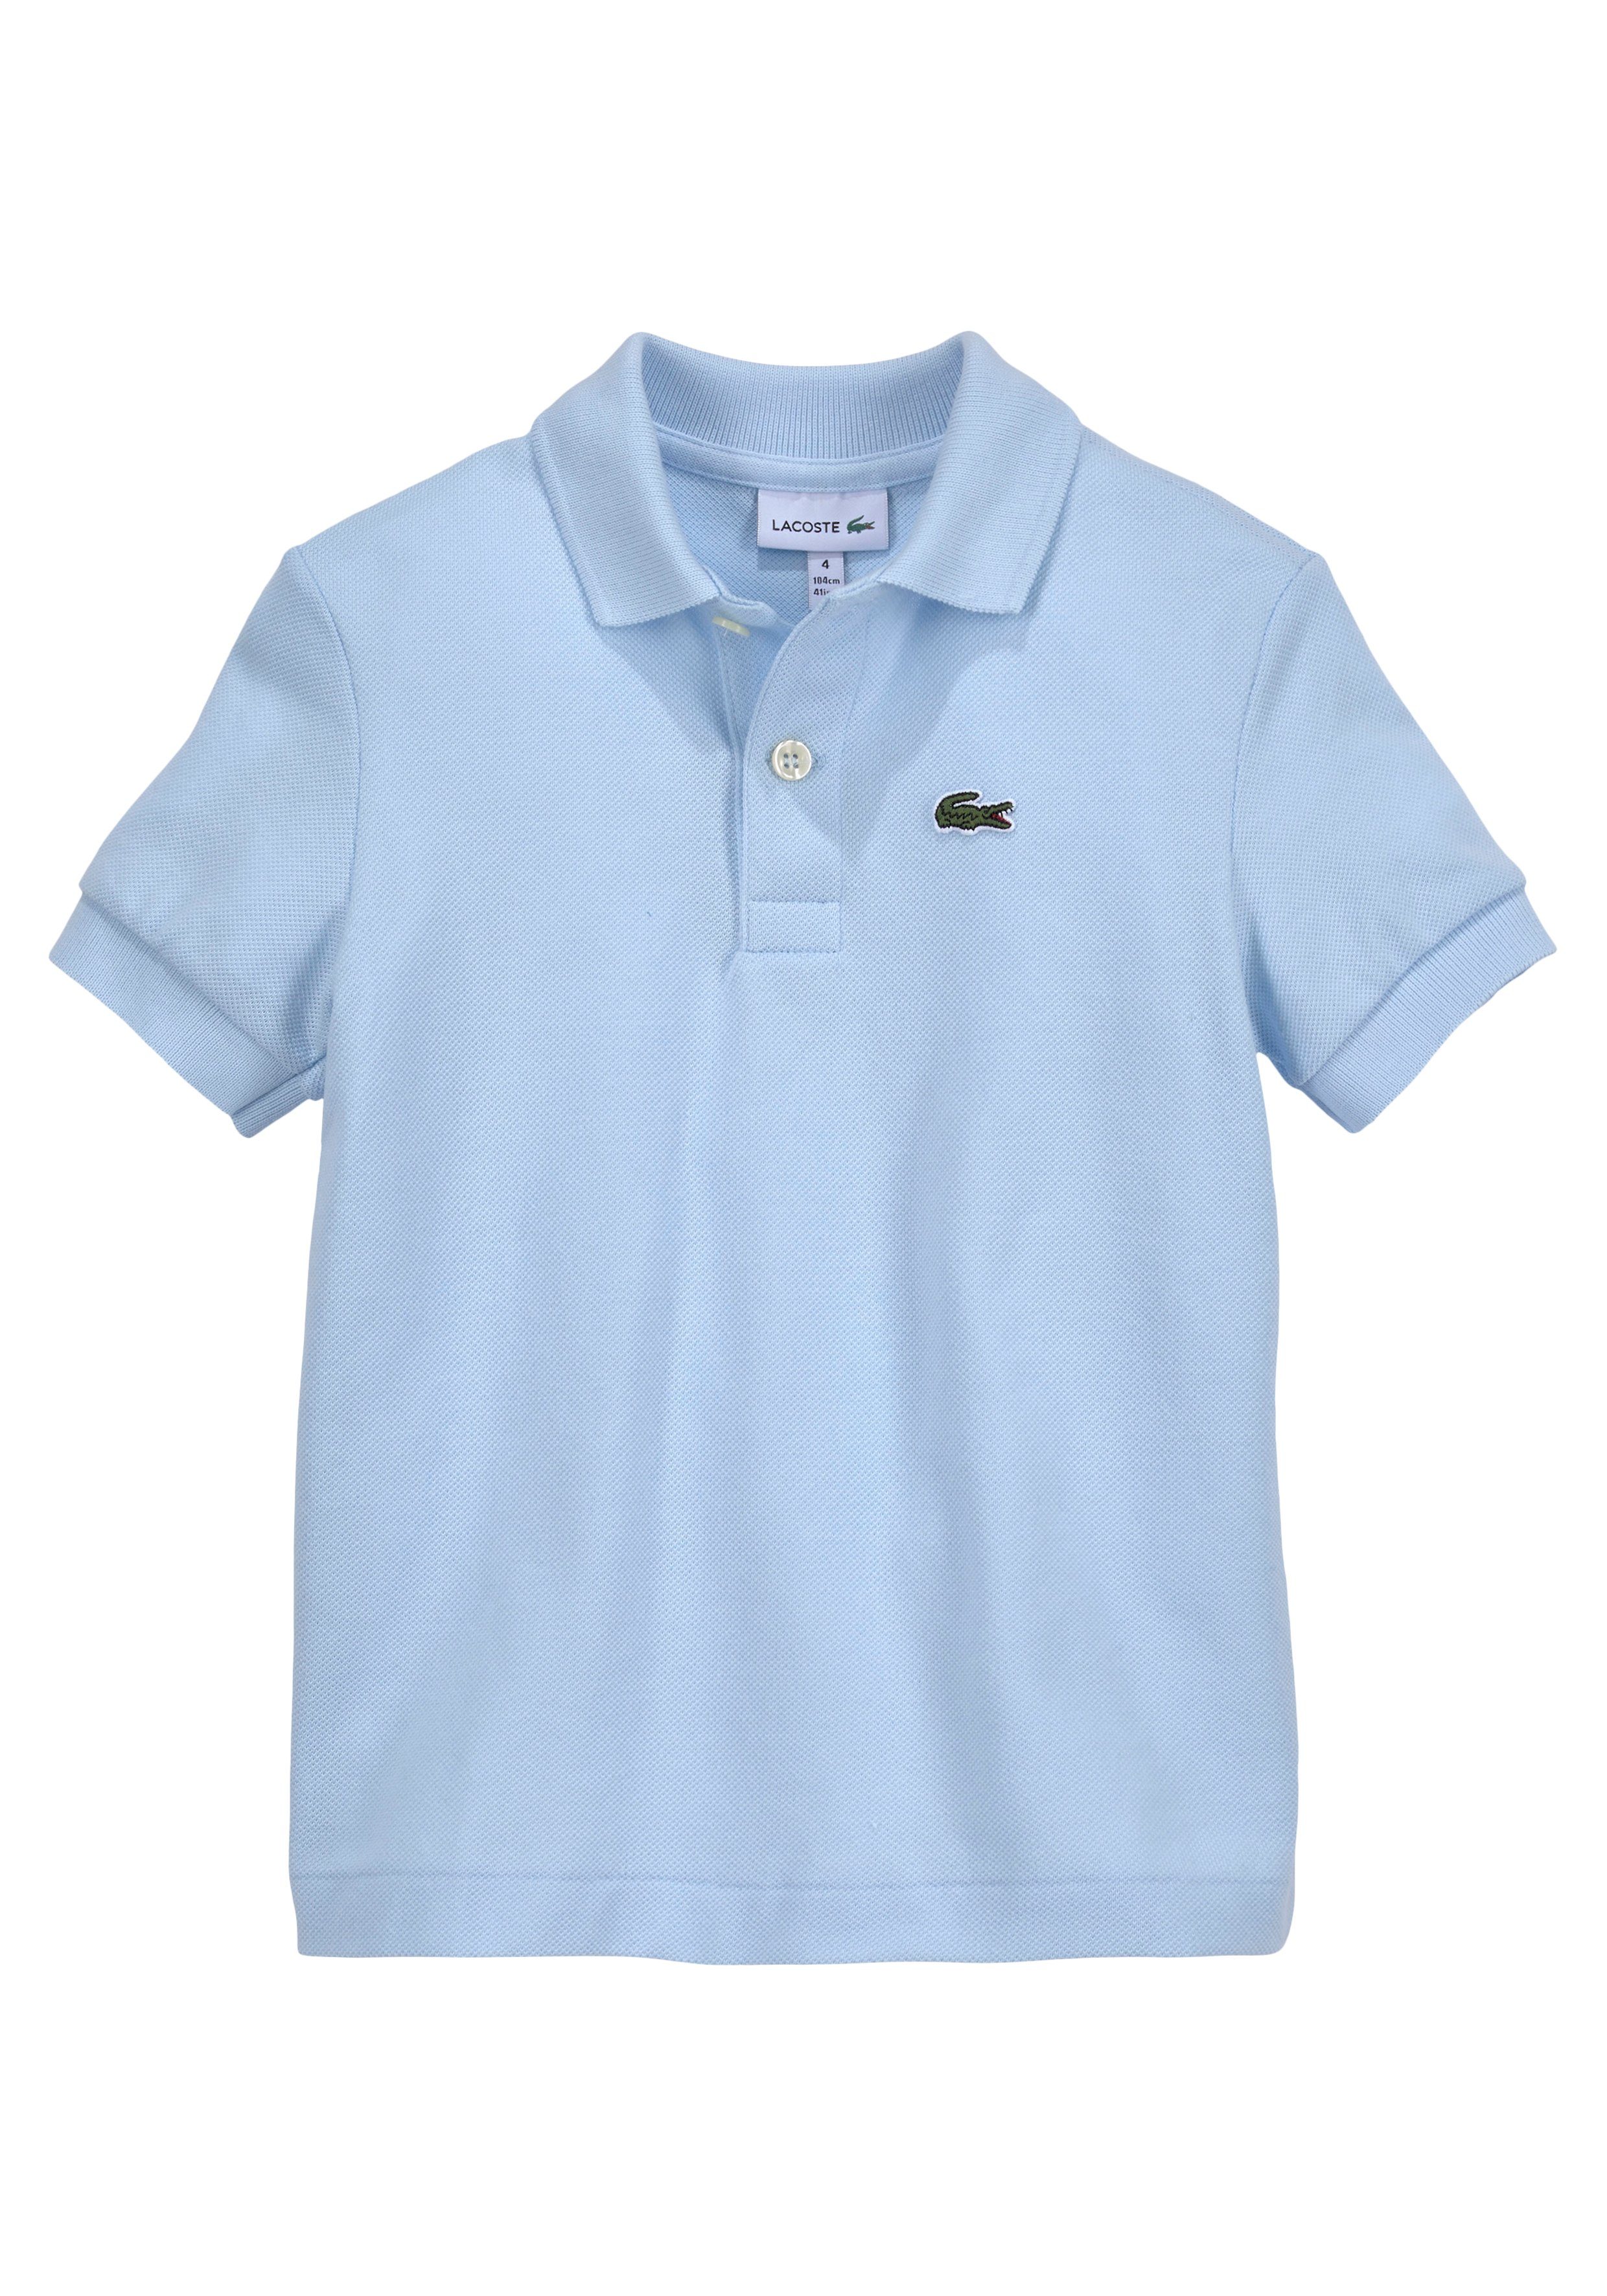 Lacoste Poloshirt Kinder Kids Junior MiniMe,Junior, Kids Polo mit aufgesticktem Kroko hellblau | Poloshirts